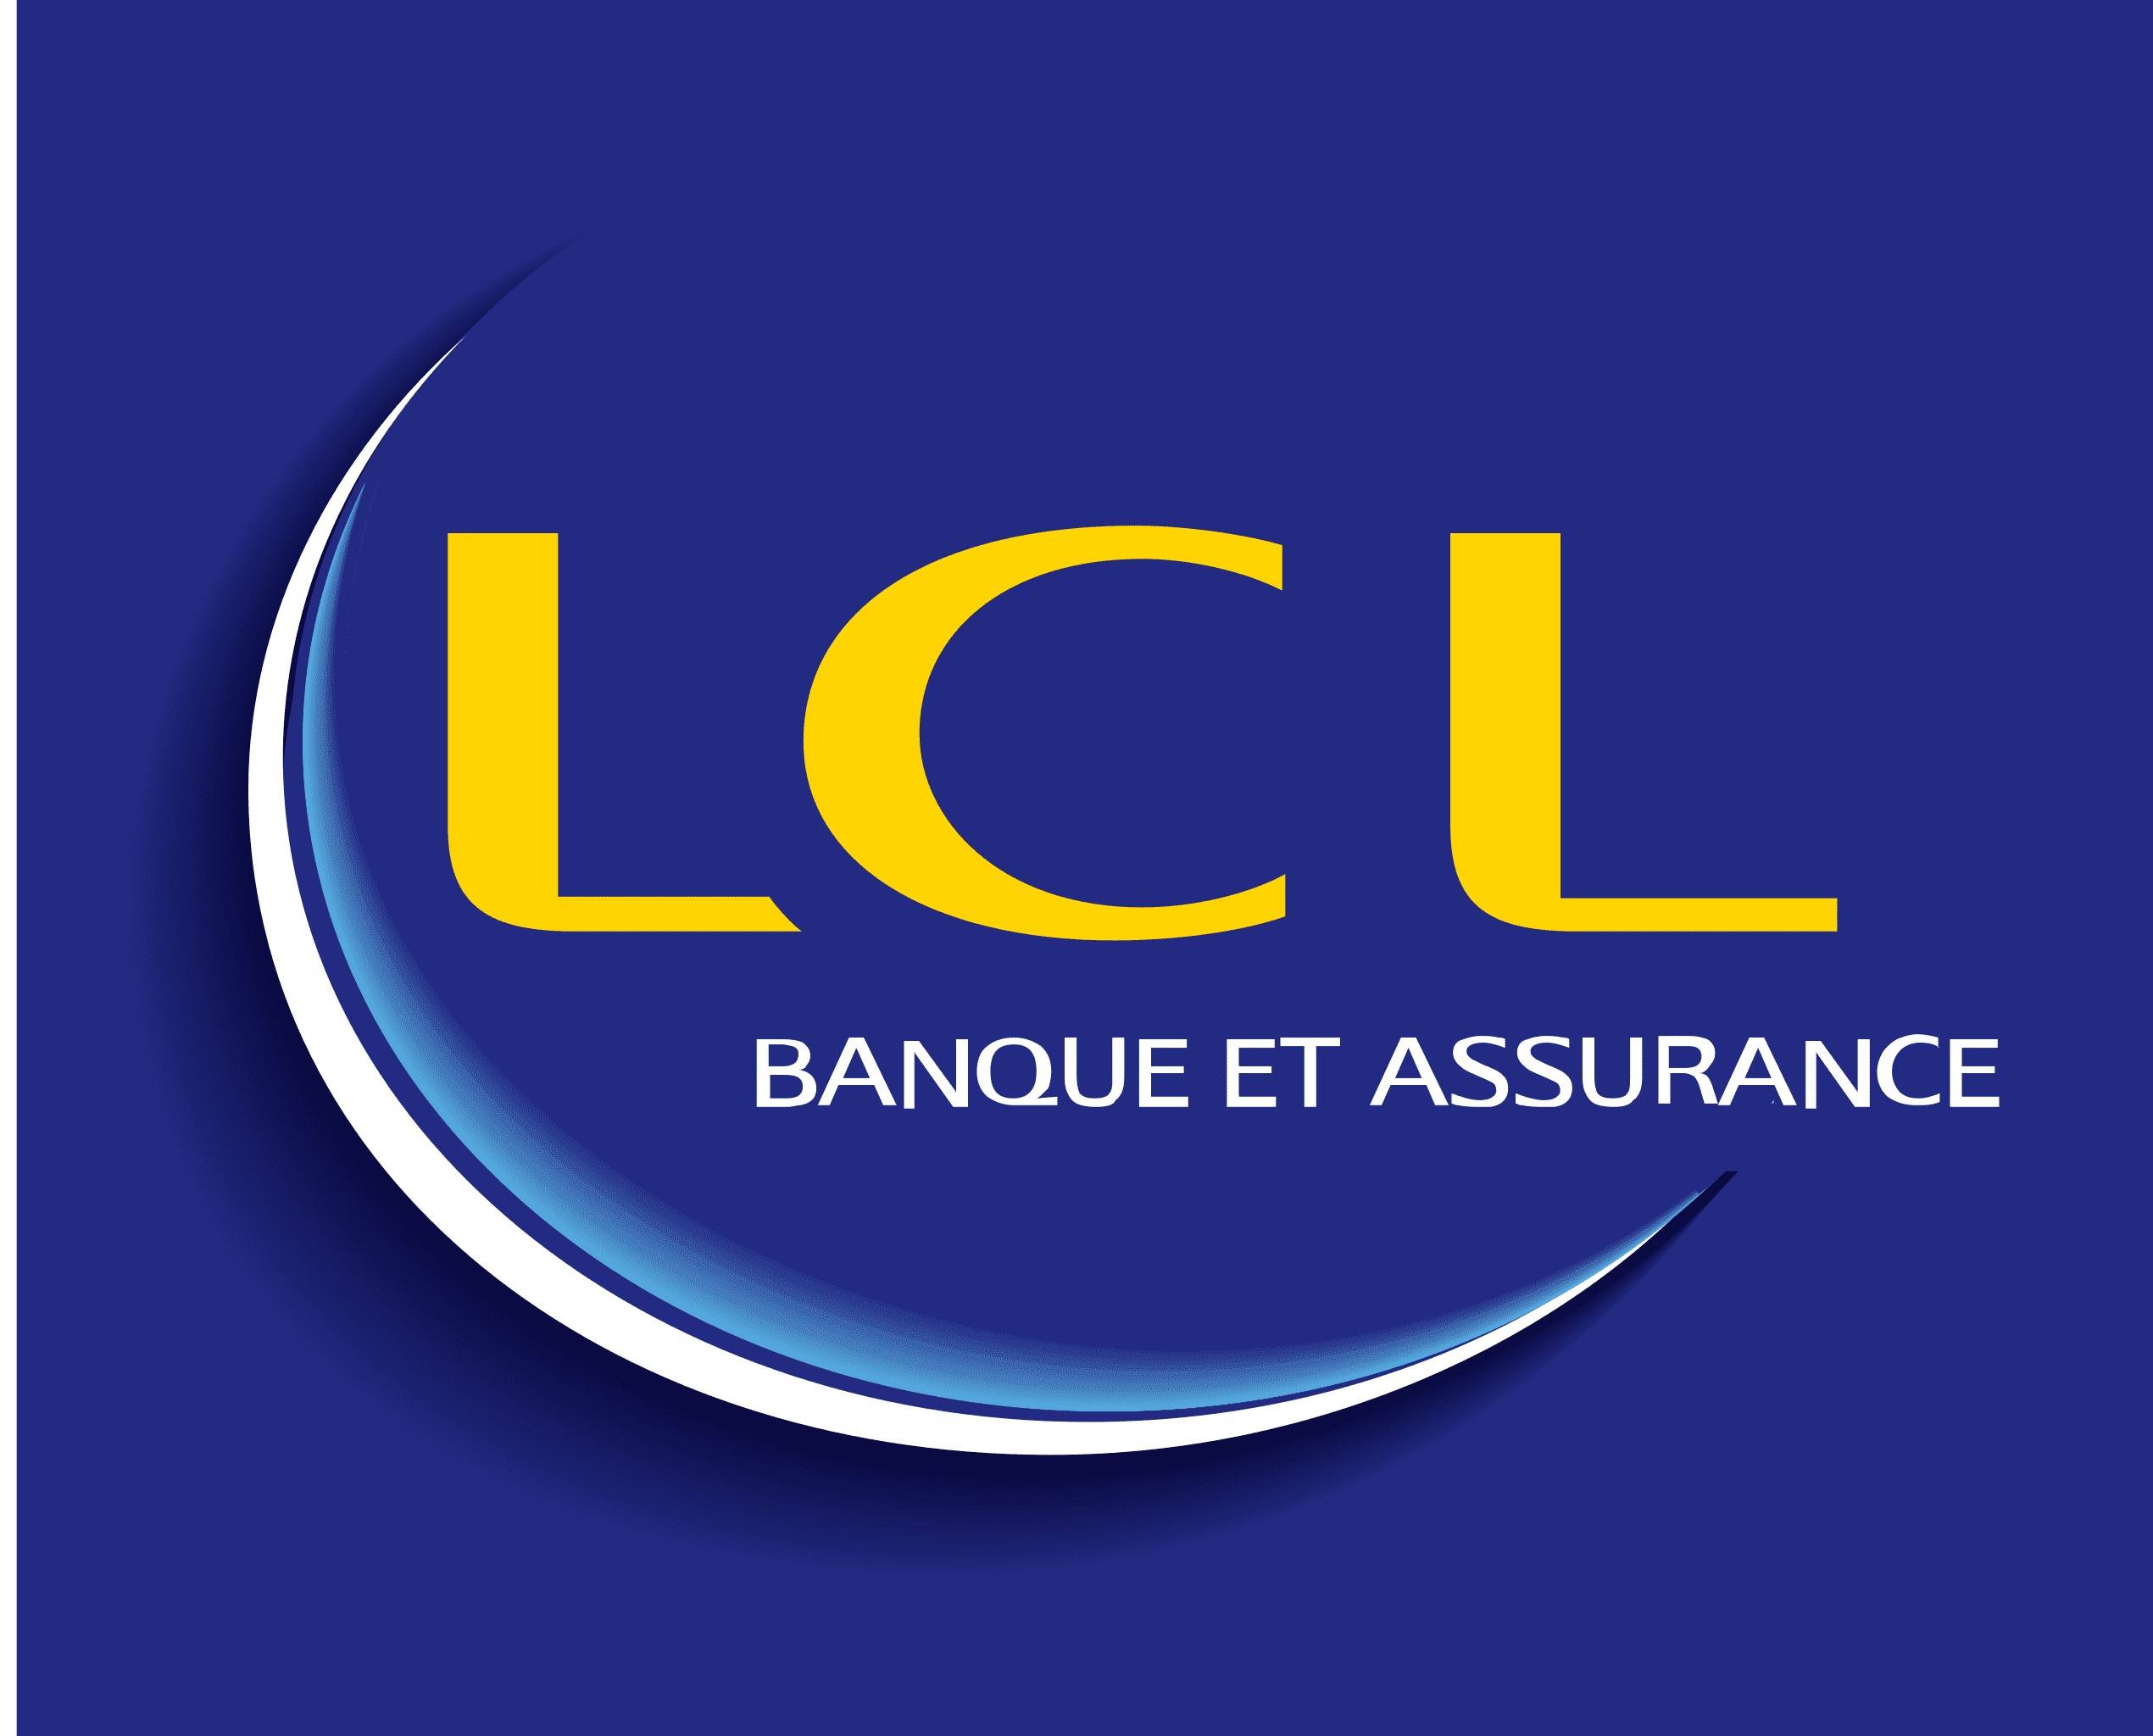 Lcl_logo.svg